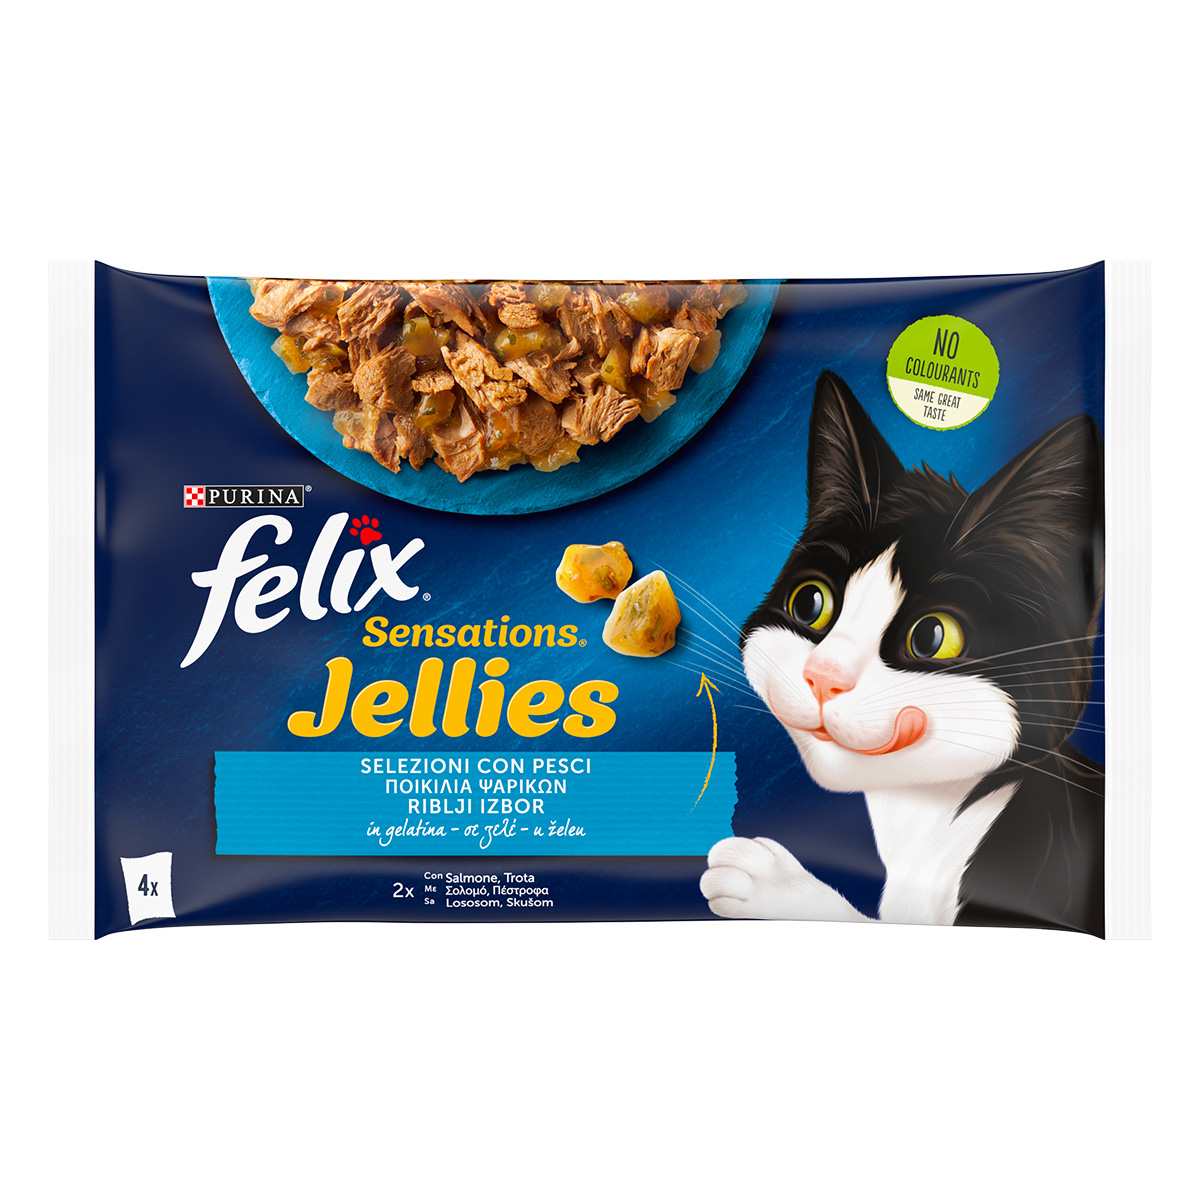 Felix Sensation Jellies Selezioni con pesci